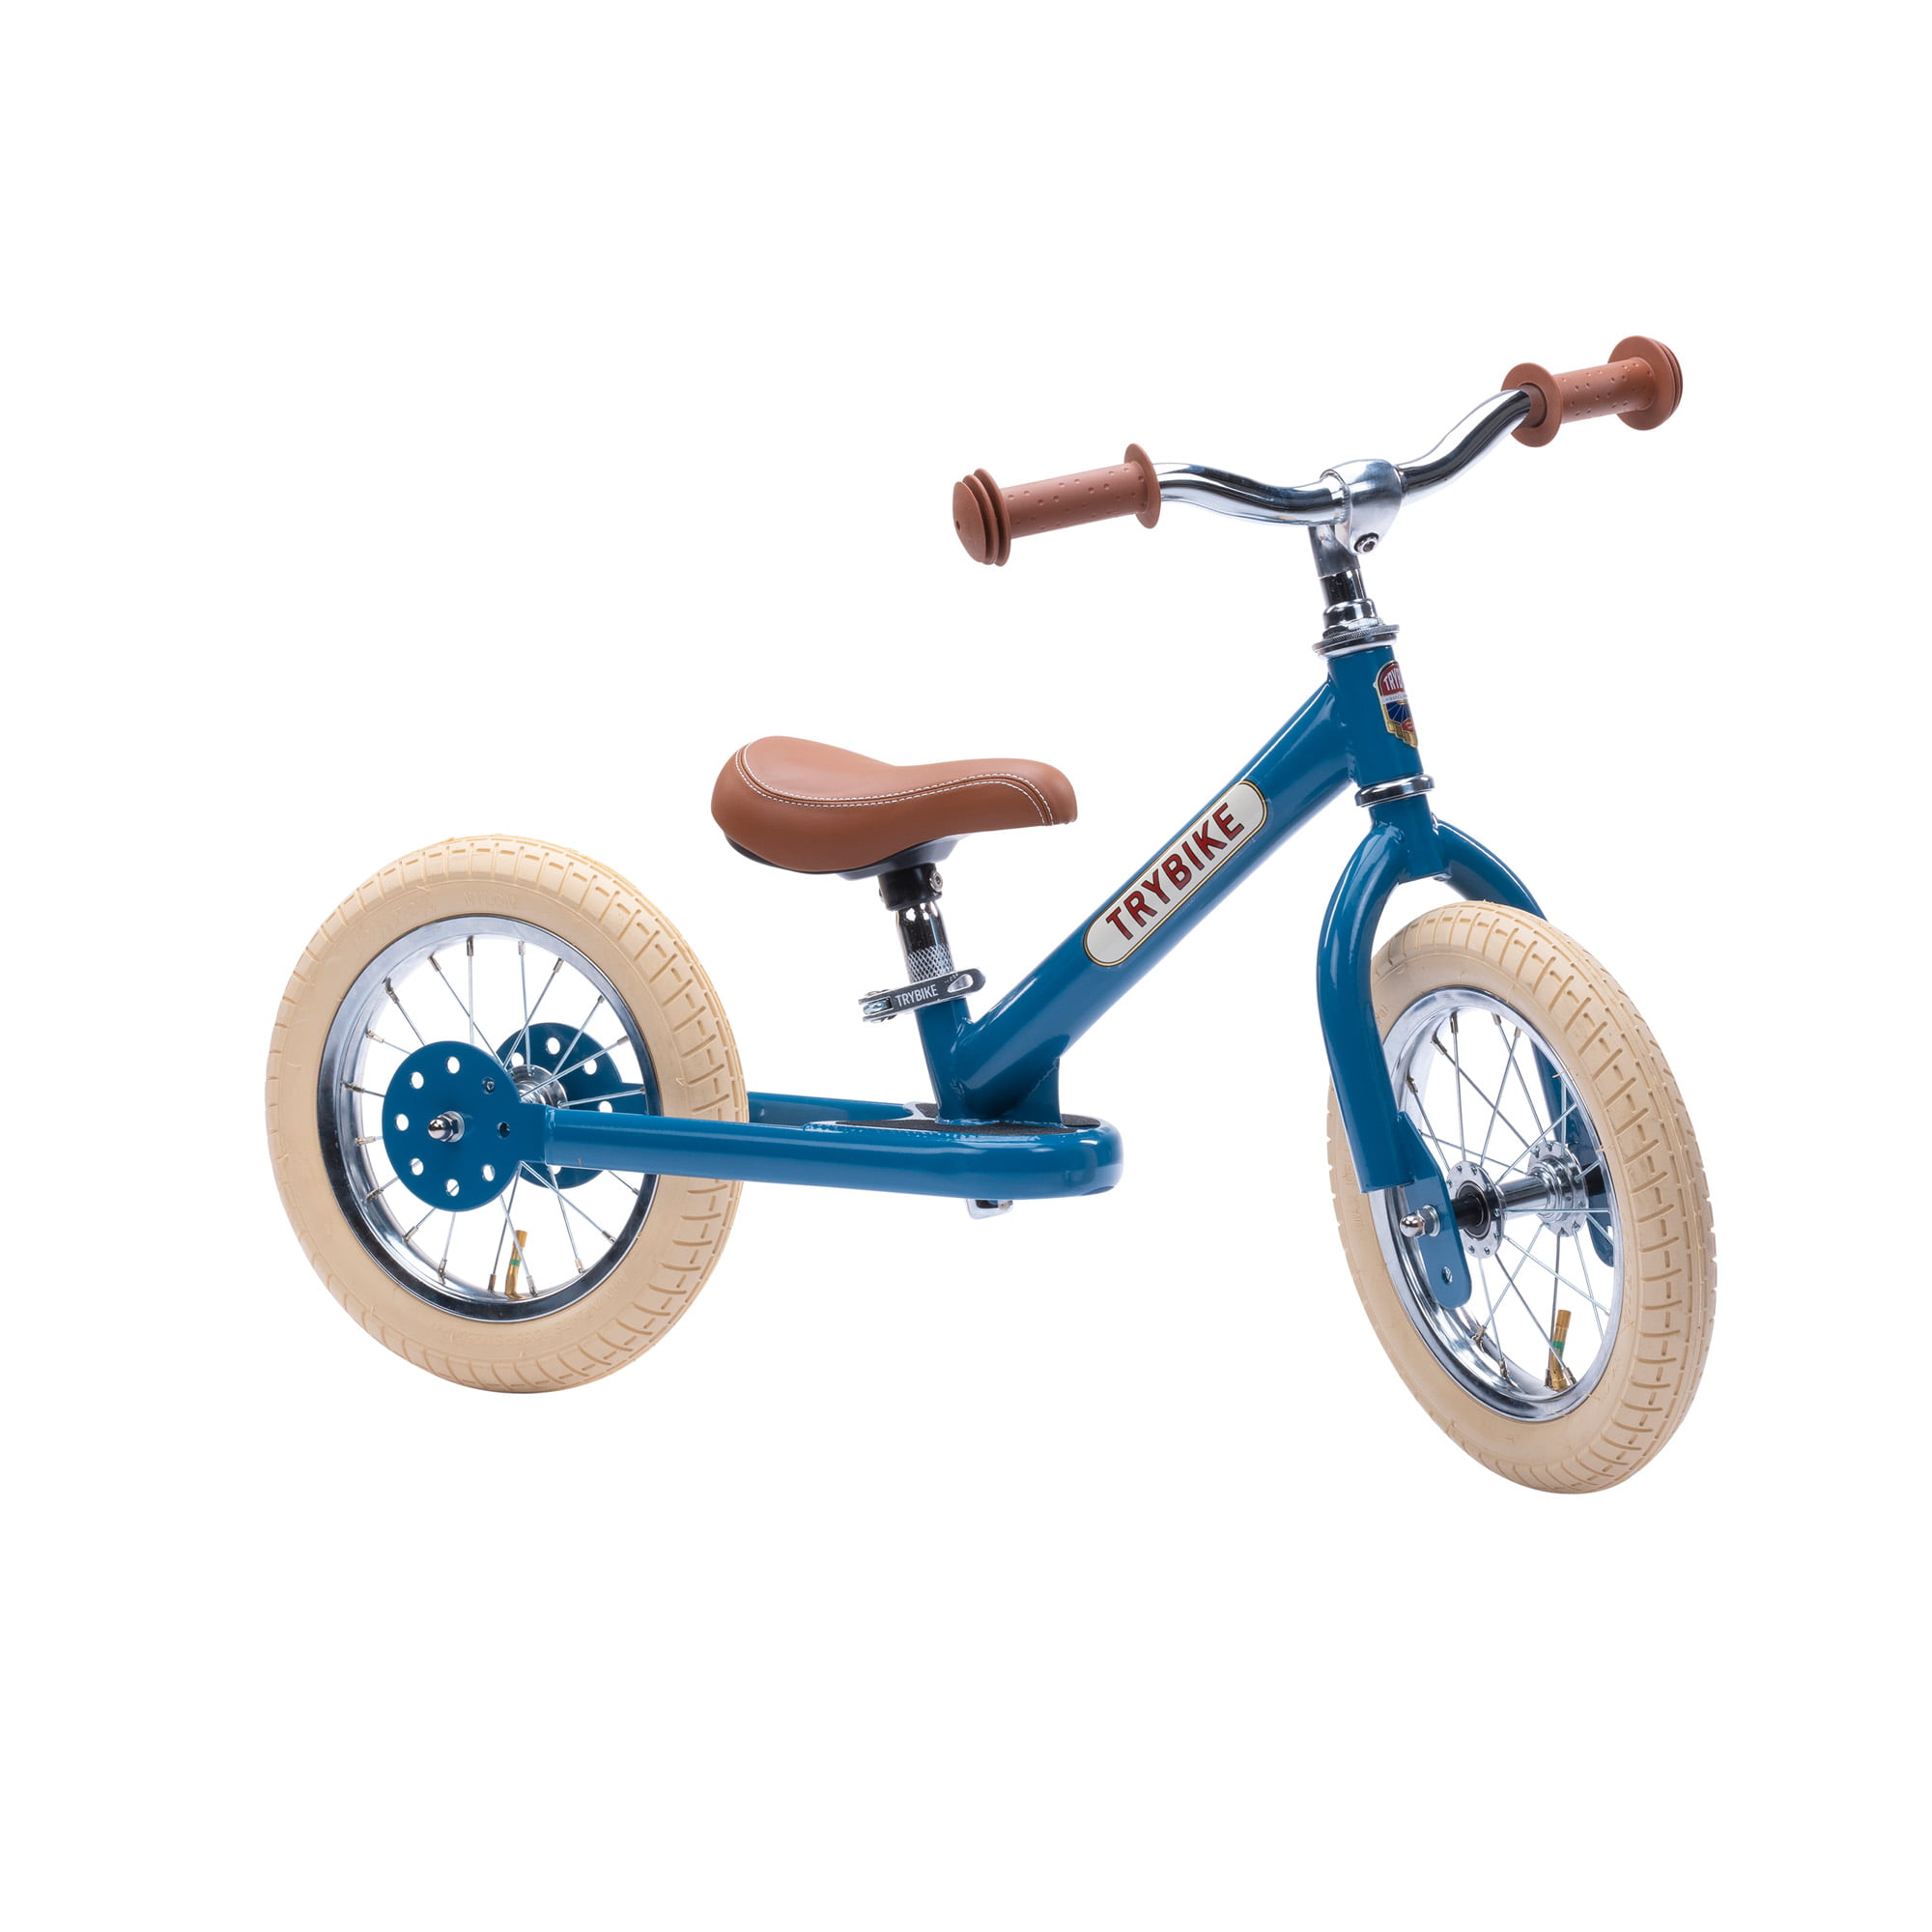 Trybike steel balance bike – Vintage blue